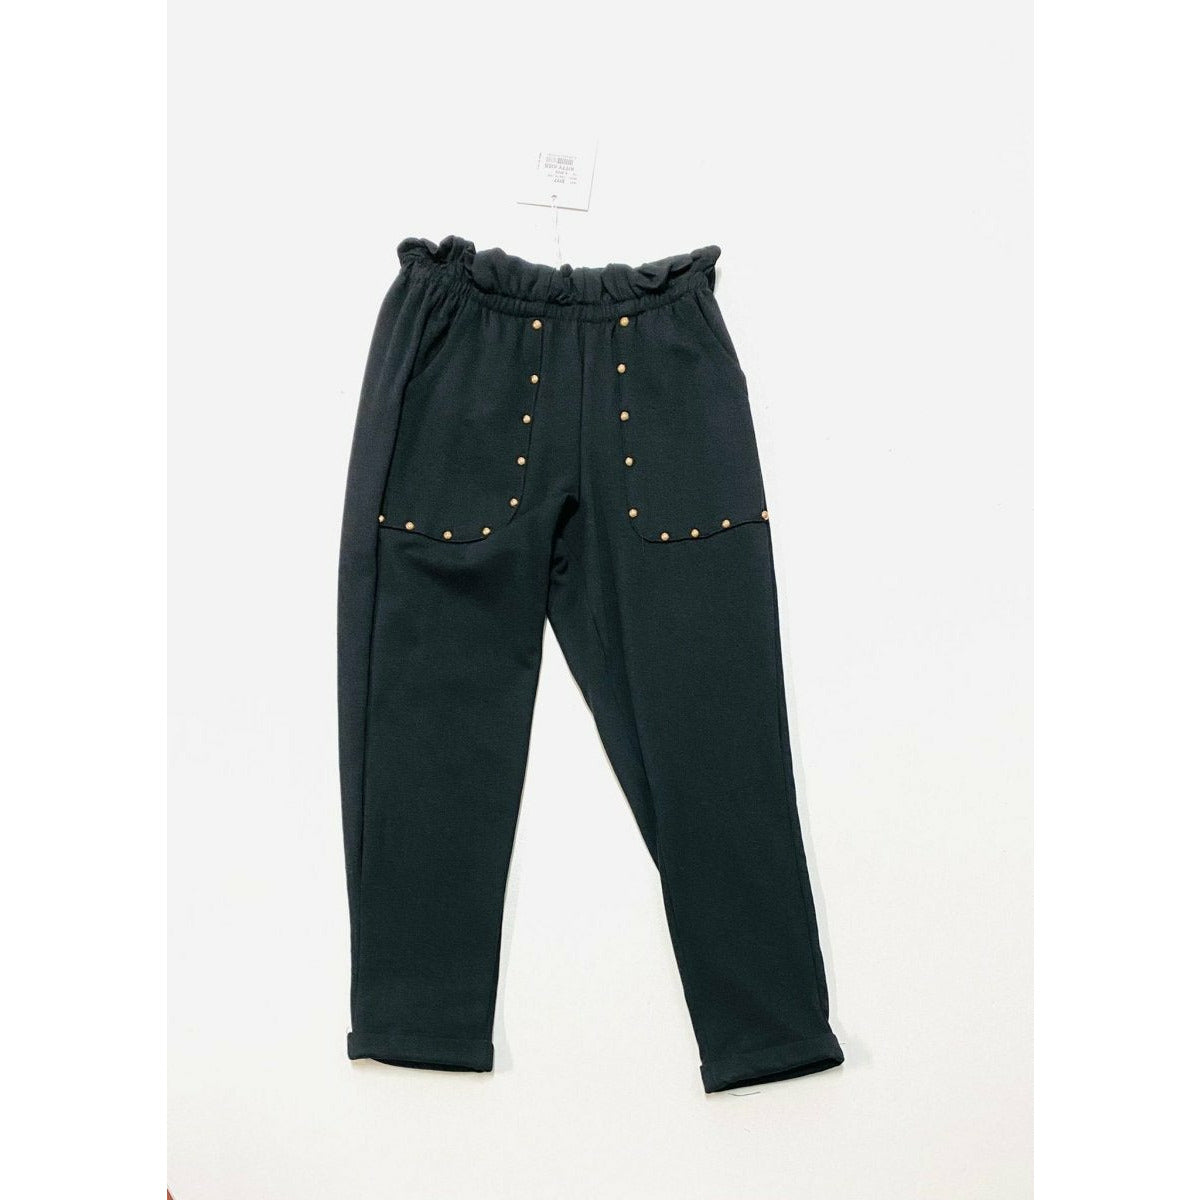 Pantalone Bimba Caldo cotone - Mstore016